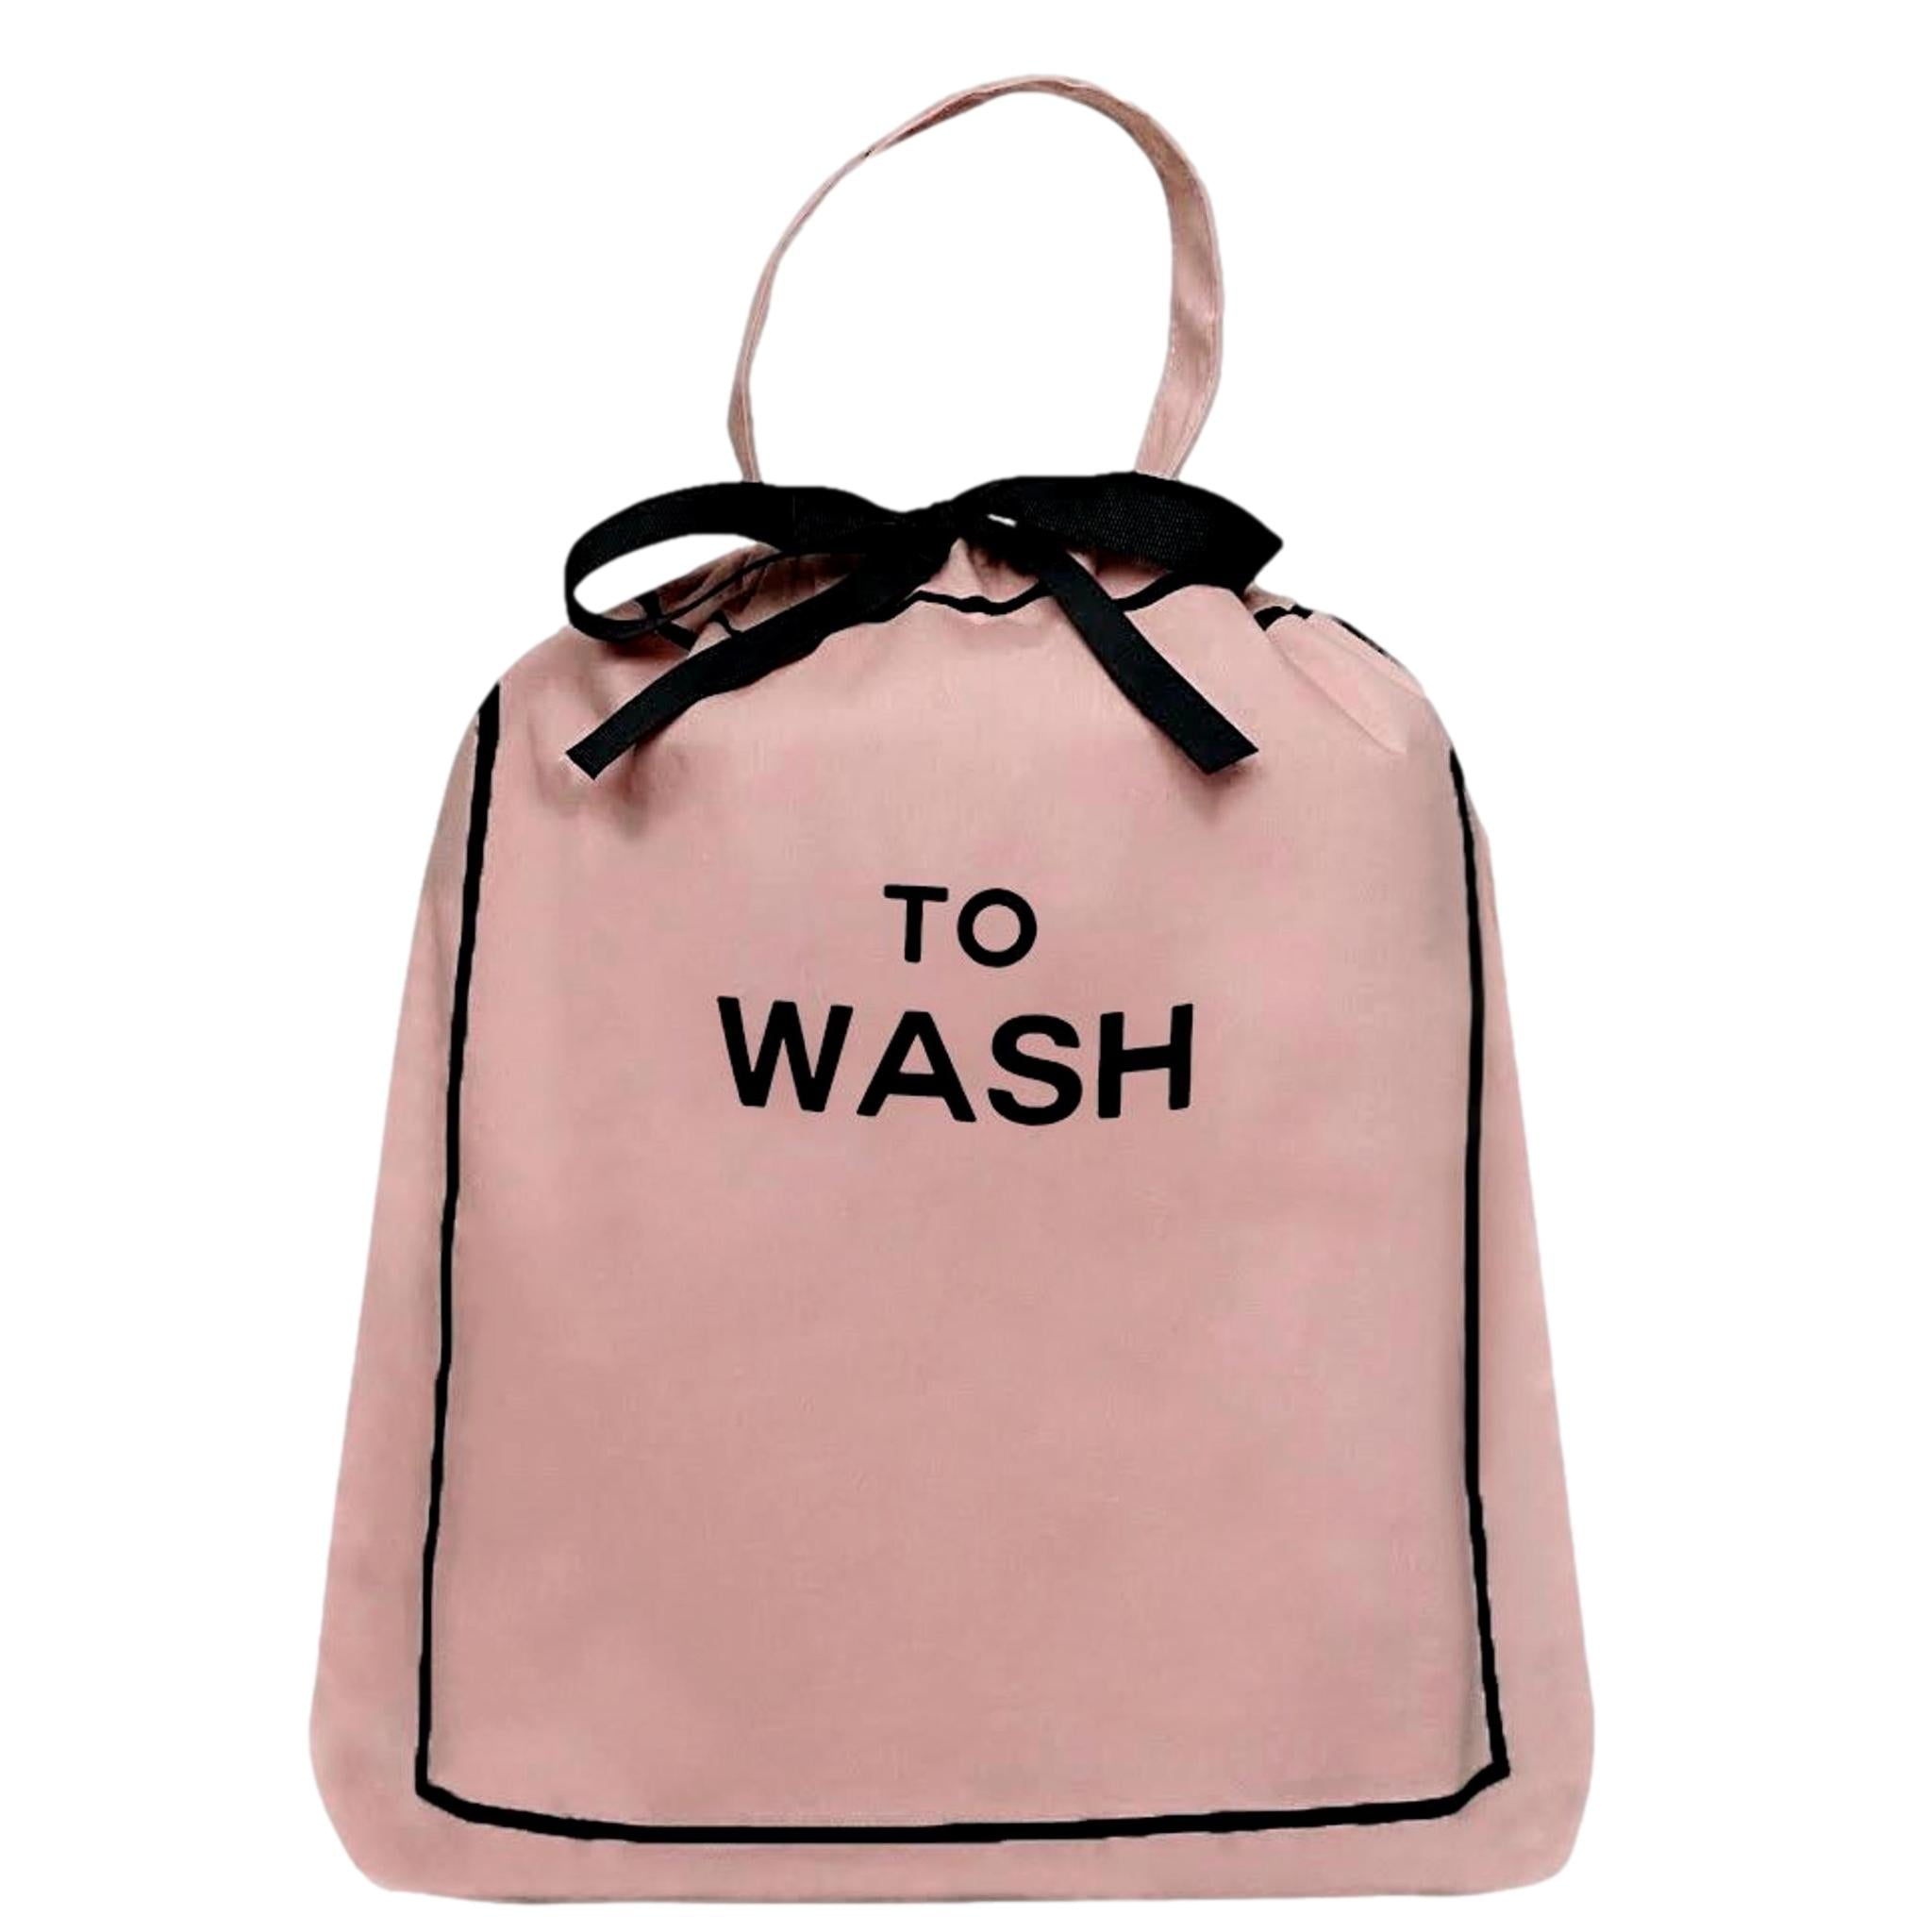 To Wash Laundry Bag, Pink/Blush